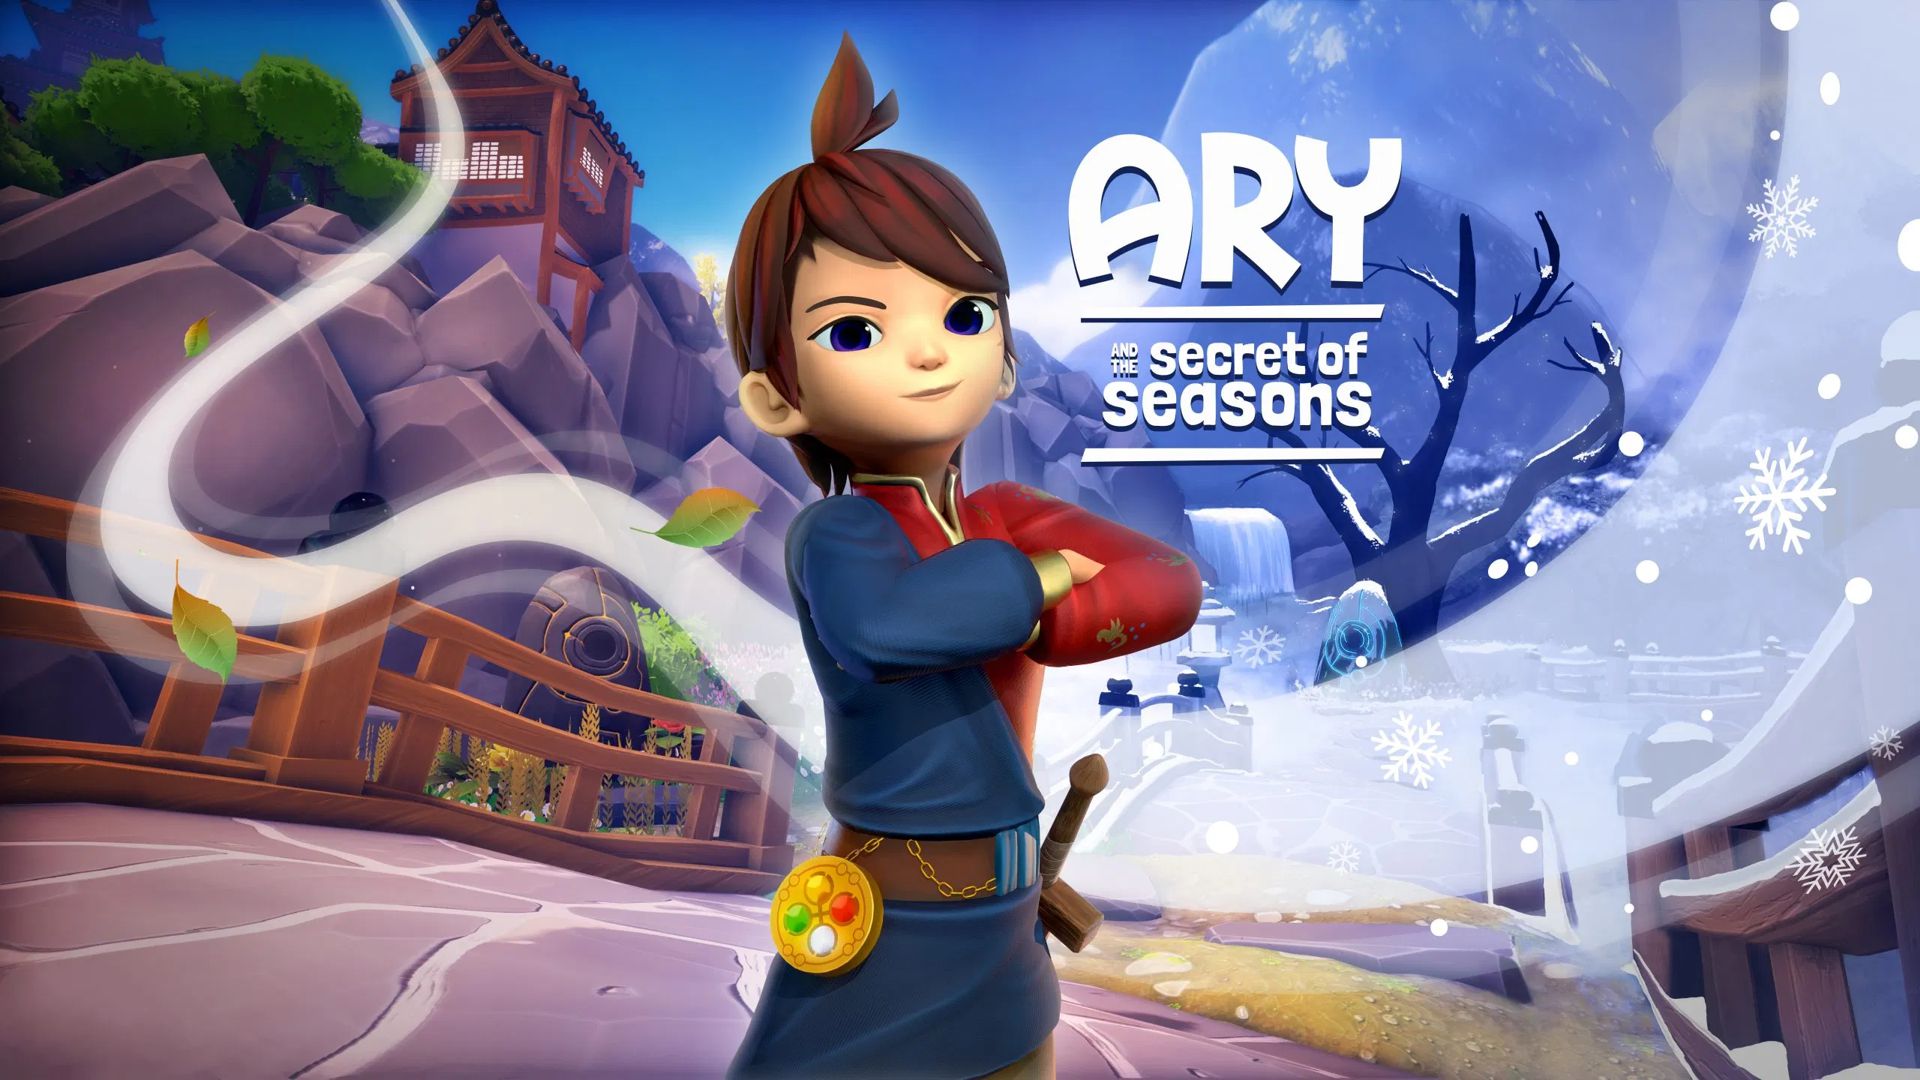 Ary and the Secret of Seasons Principal